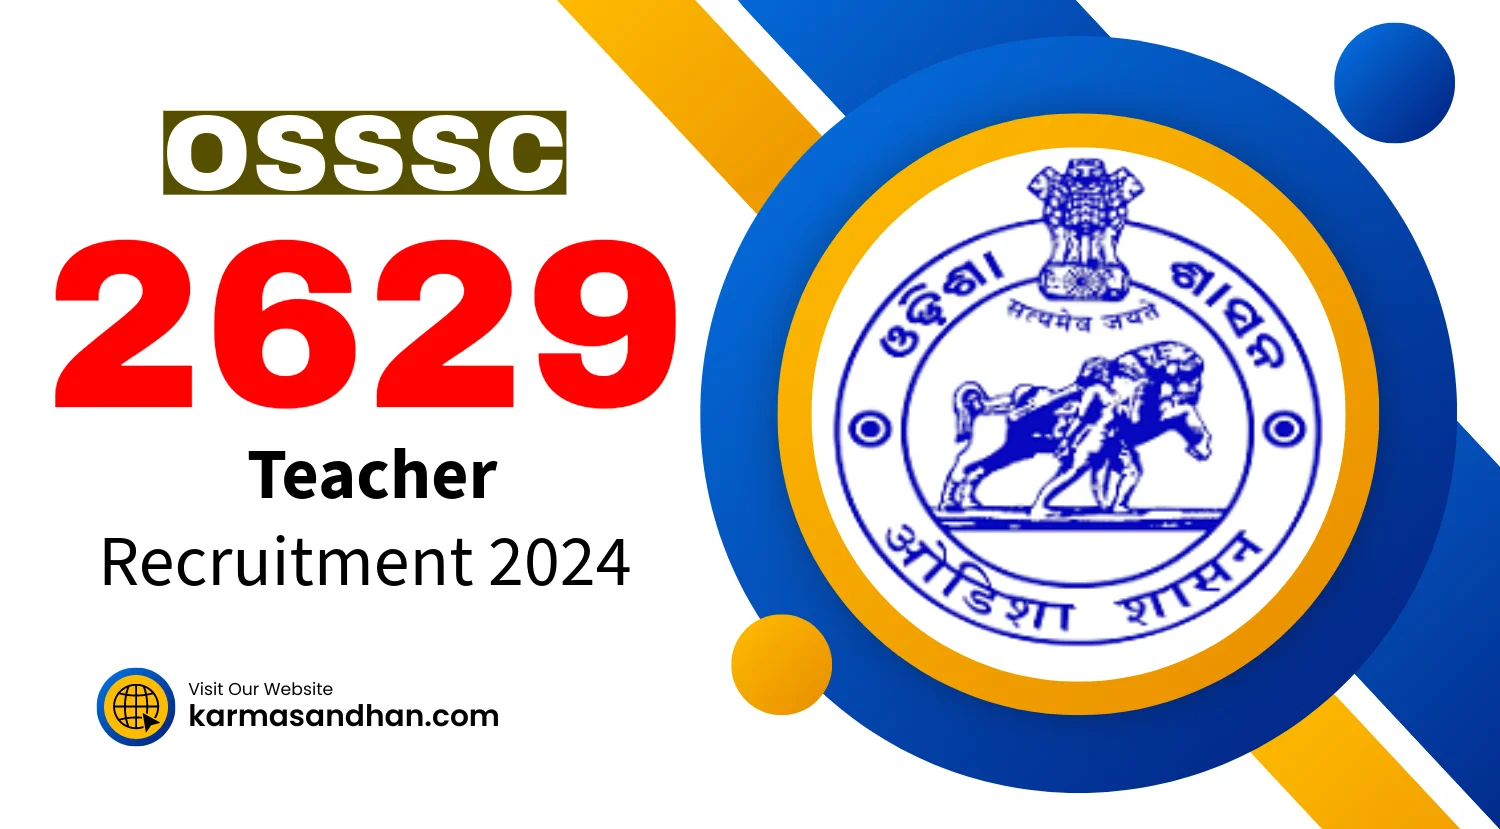 OSSSC Teacher Recruitment 2024 for 2629 post Begins from 1st May